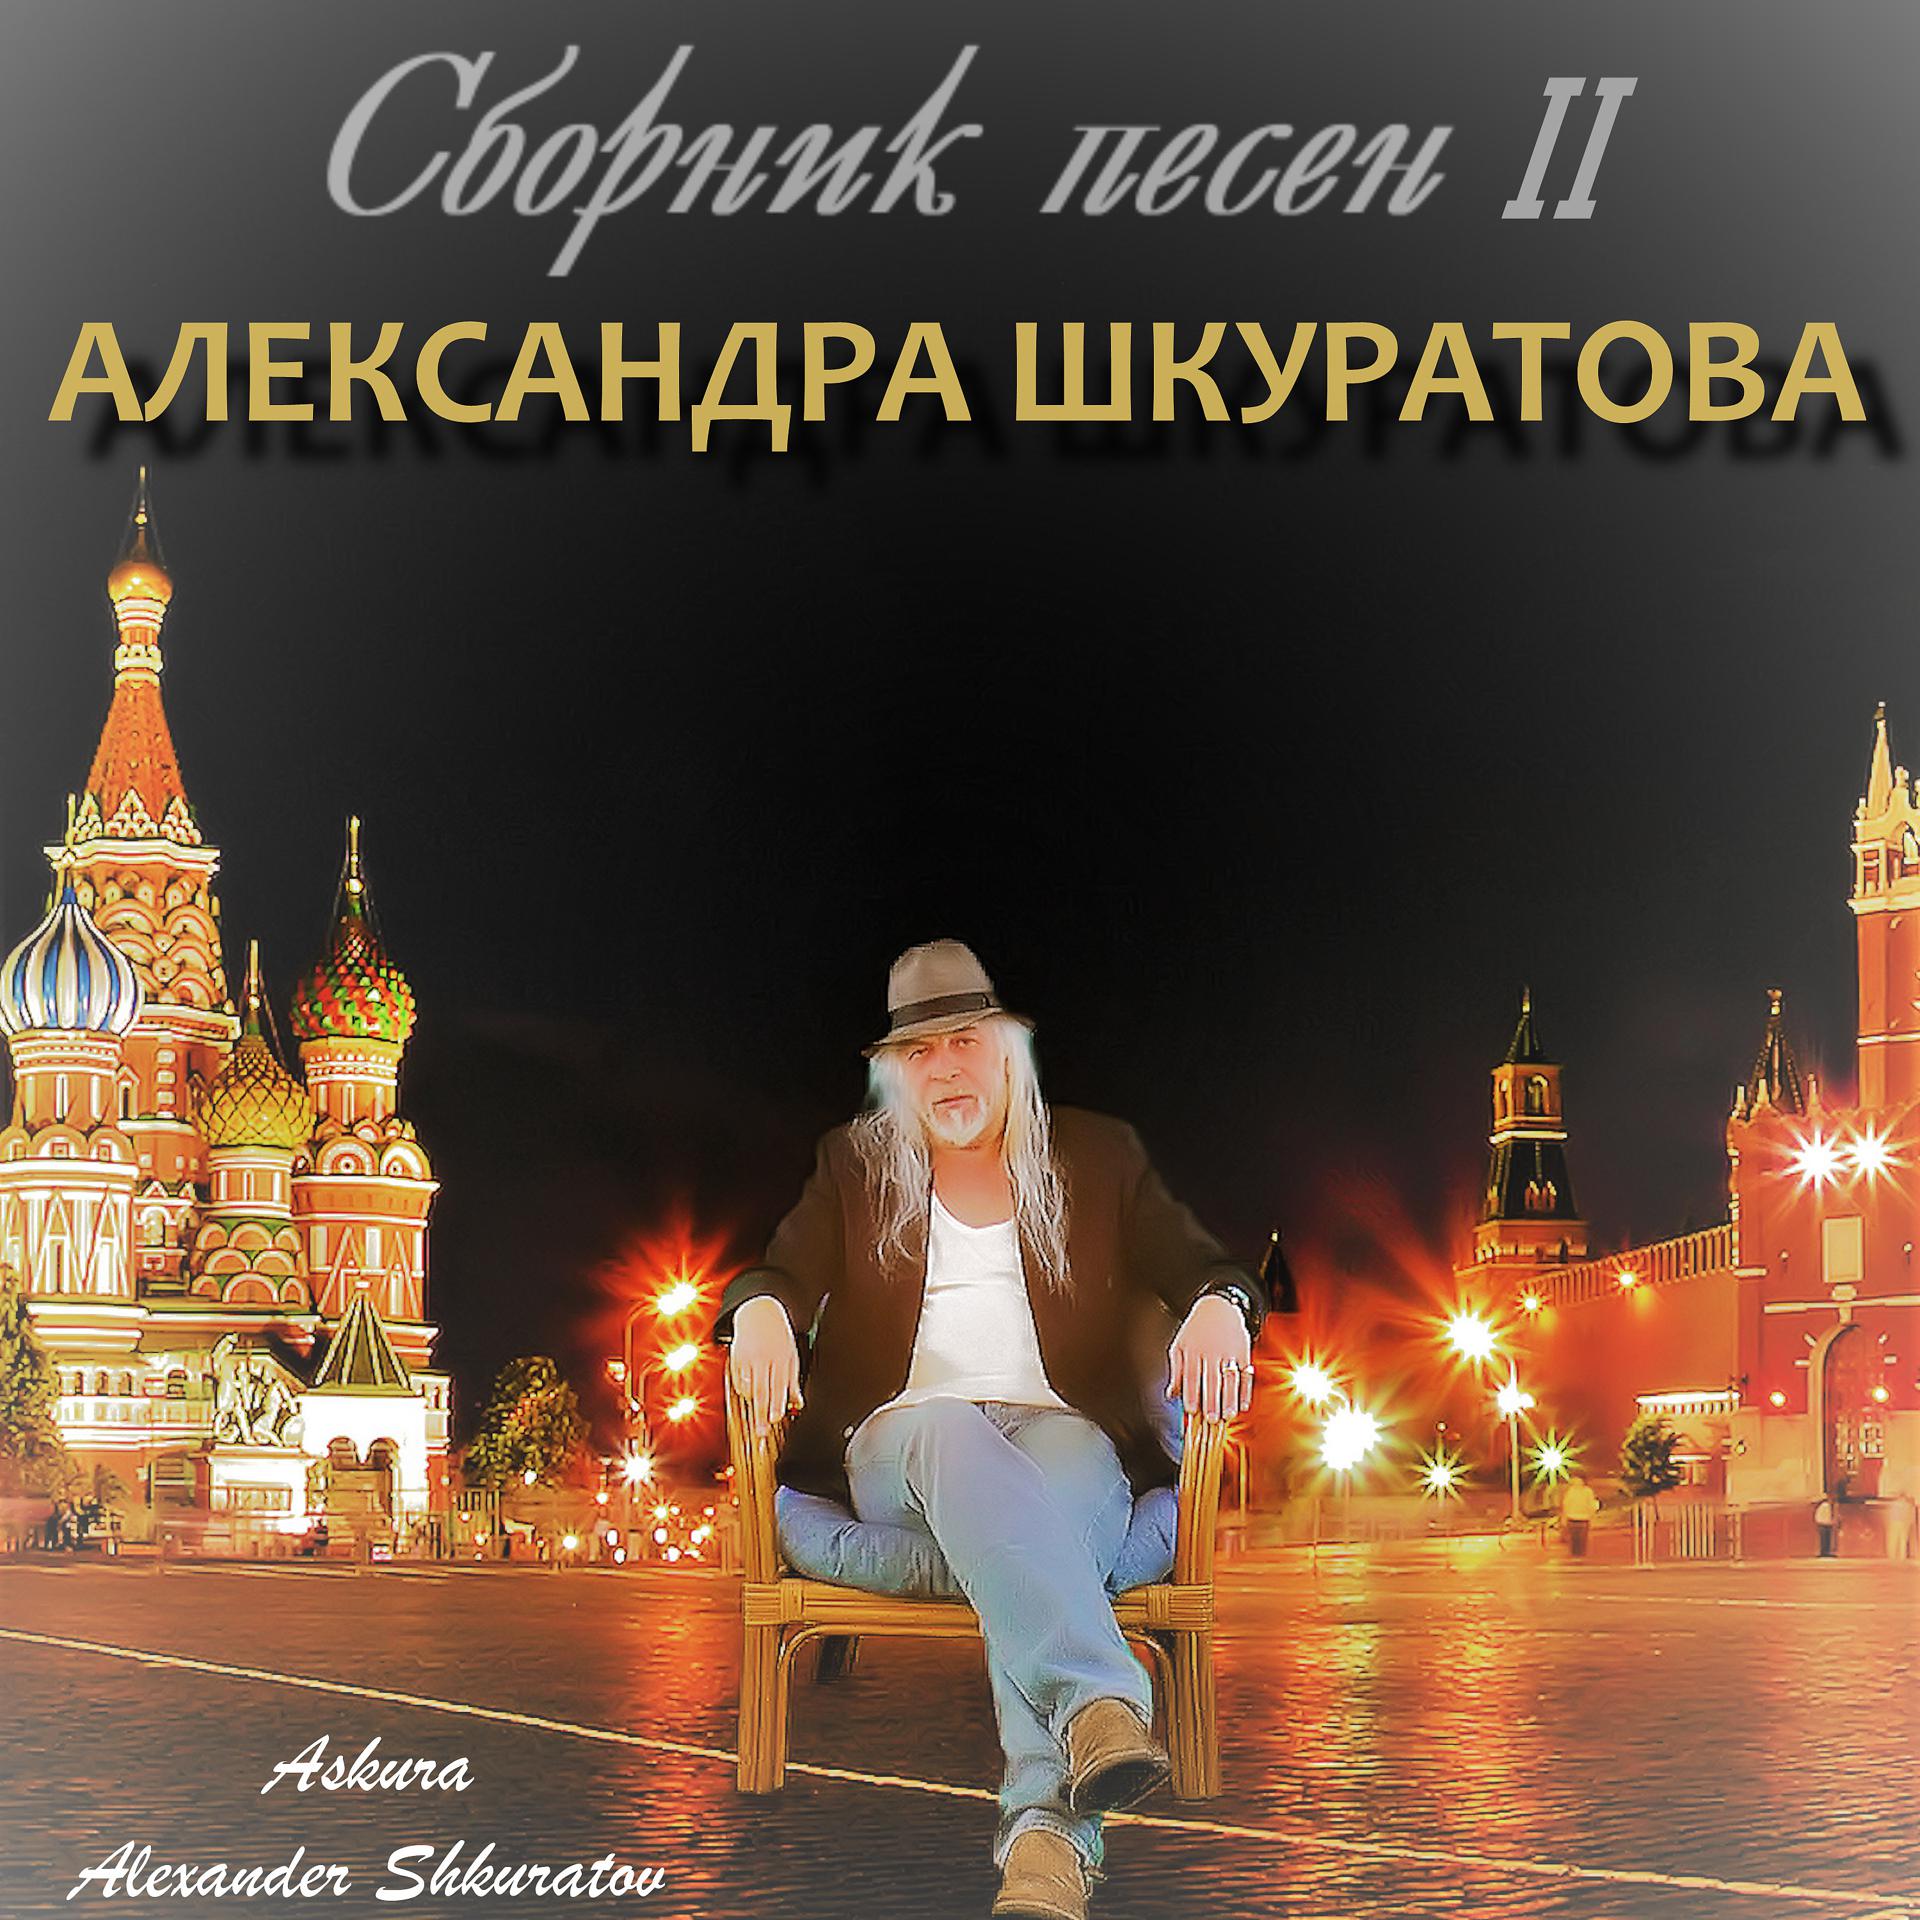 Постер к треку Askura Alexander Shkuratov, Анжелика Агурбаш - Делай это